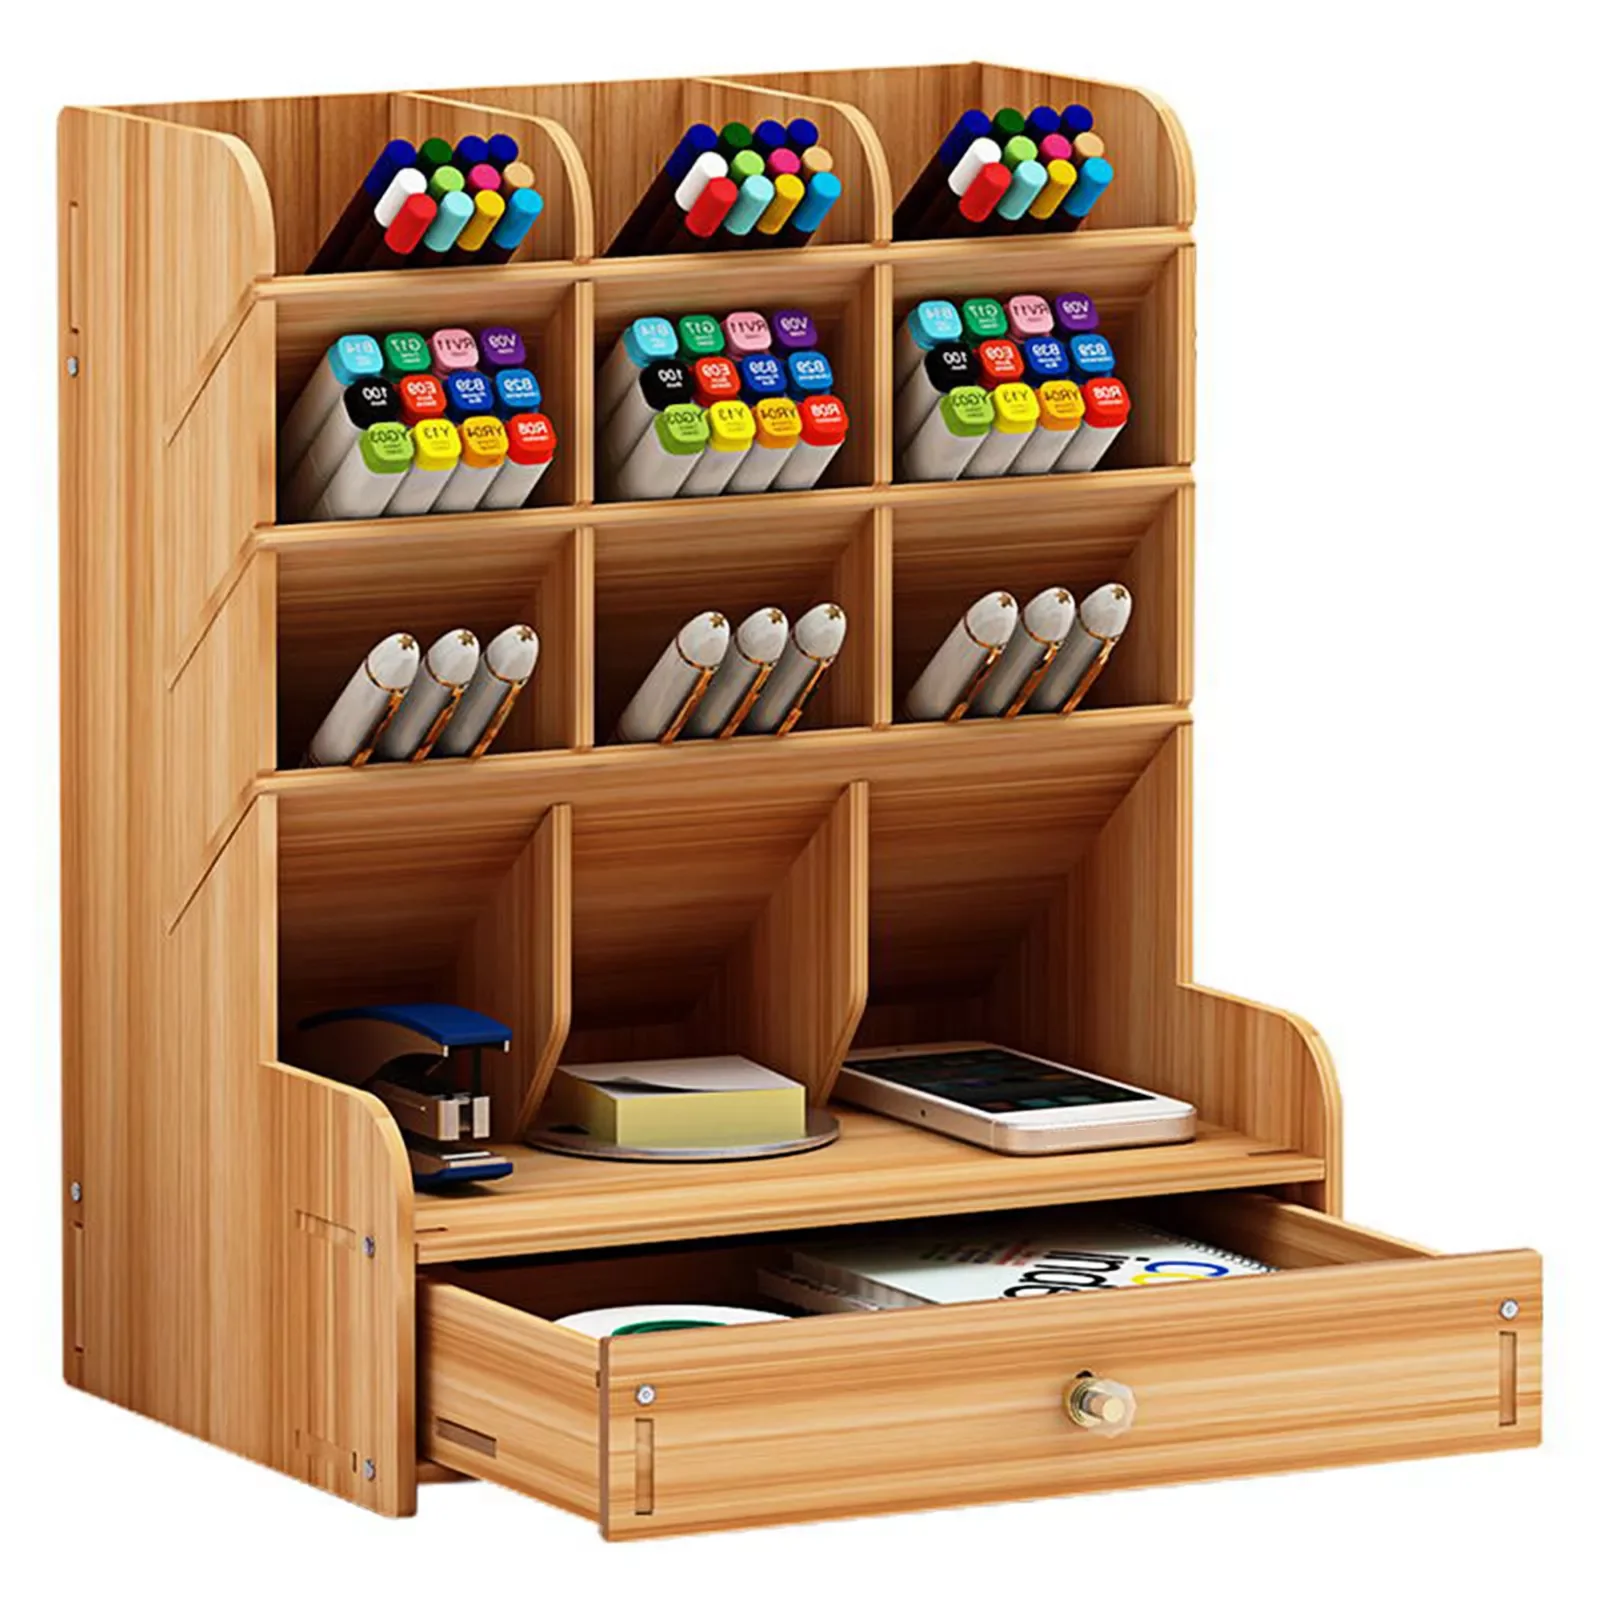 Wooden Desktop Organizer Multi-functional Pen Holder Storage Box Desktop Stationary Storage Organizer with Drawer for Office